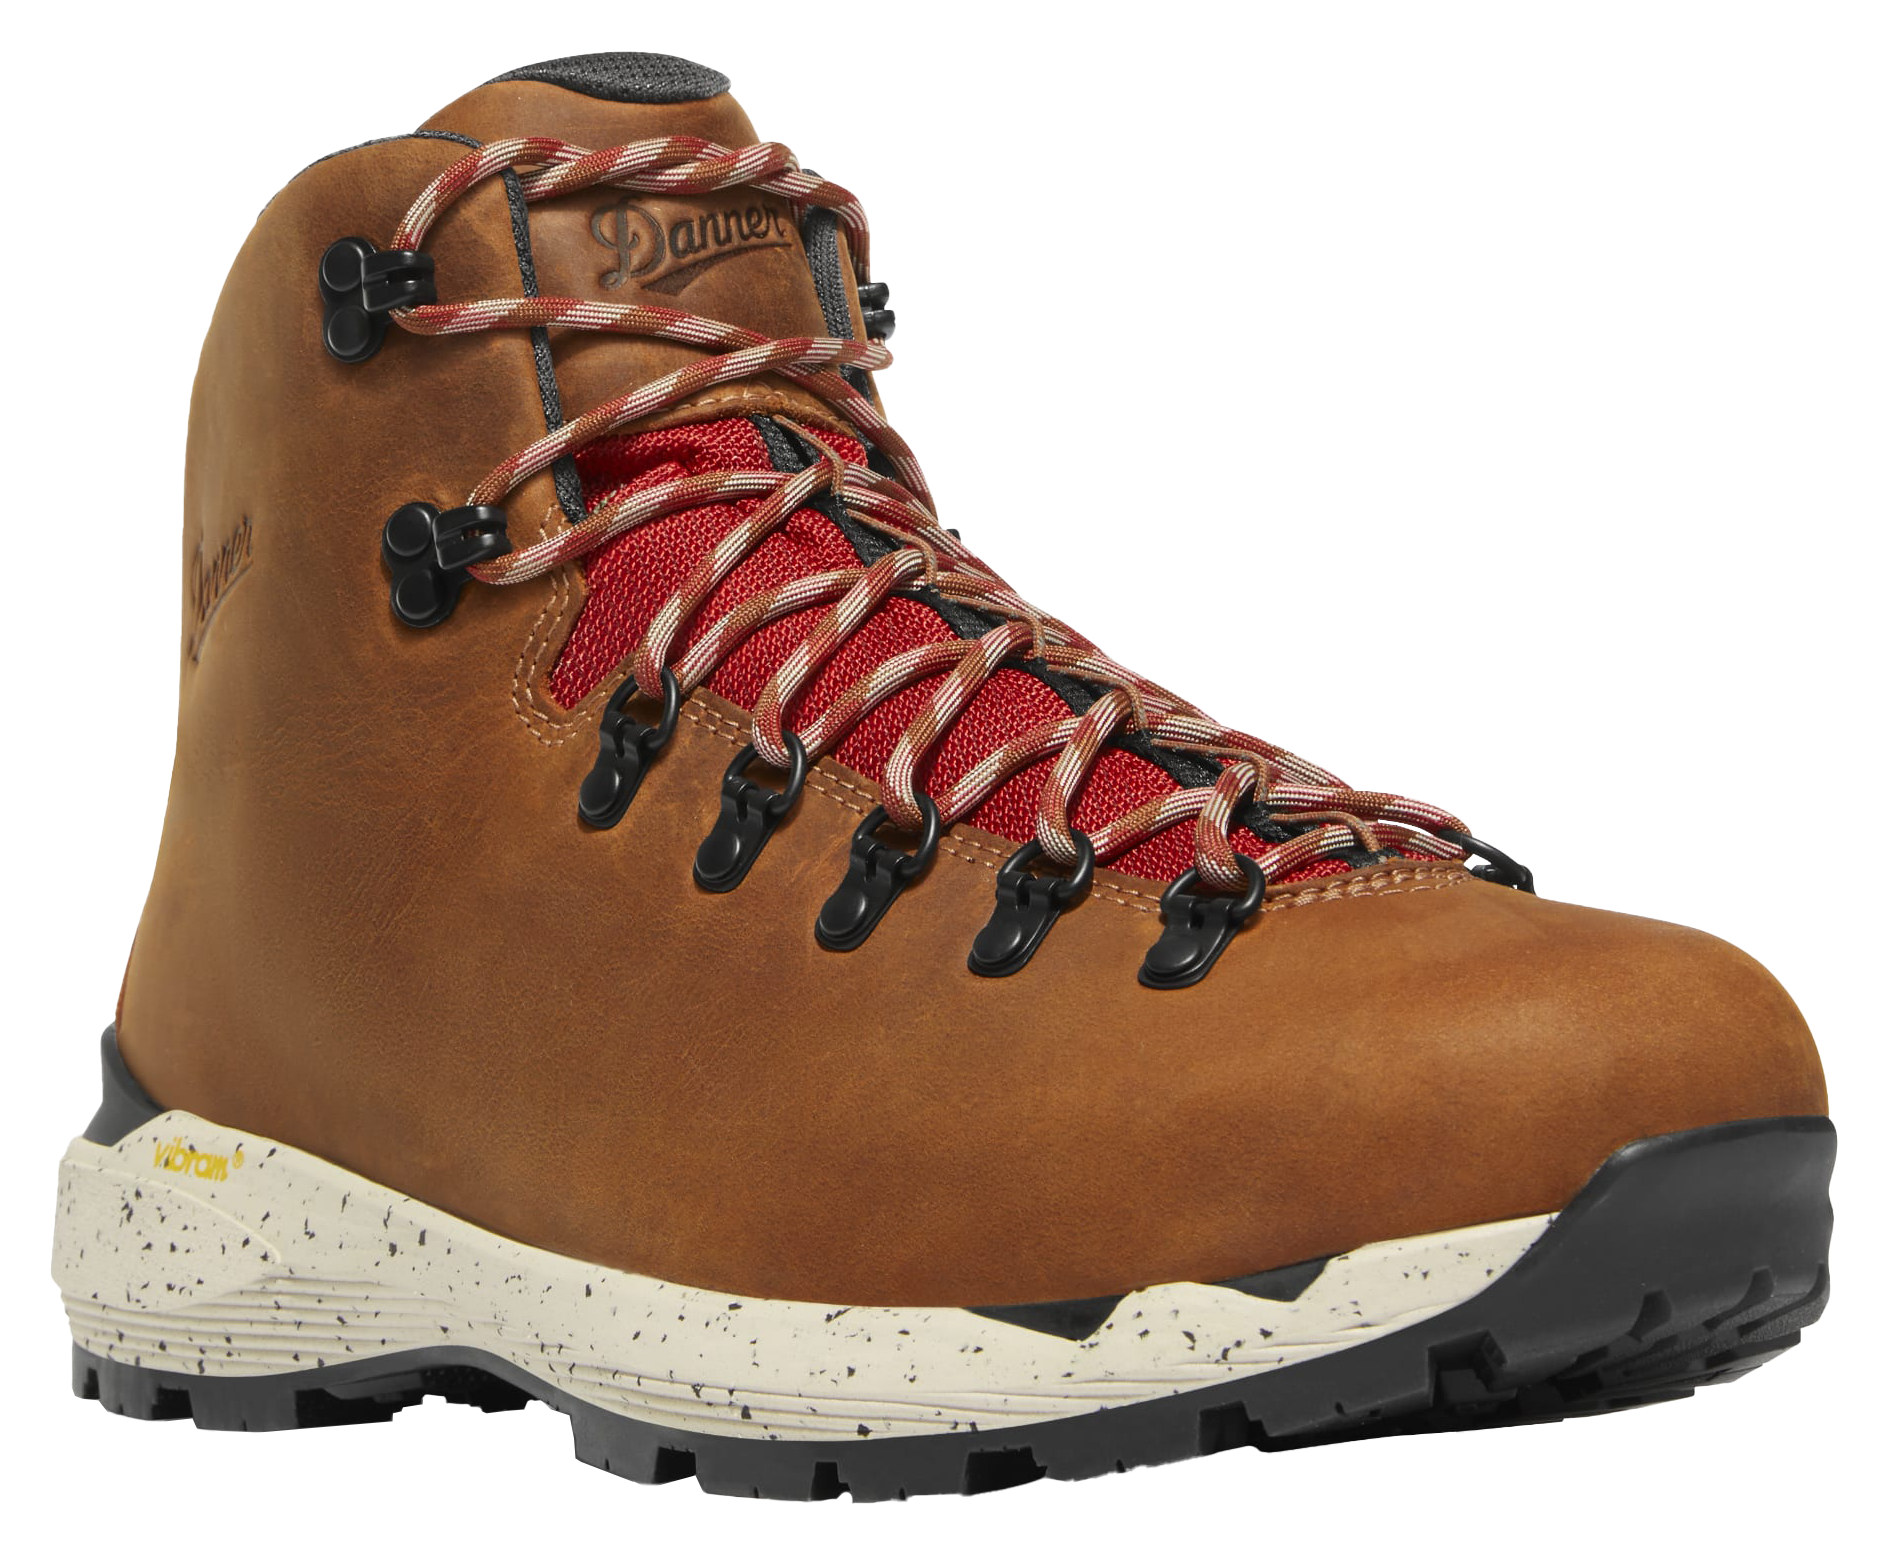 Danner Mountain 600 Evo GORE-TEX Hiking Boots for Men | Bass Pro Shops - Mocha Brown/Rhodo Red - 9.5M